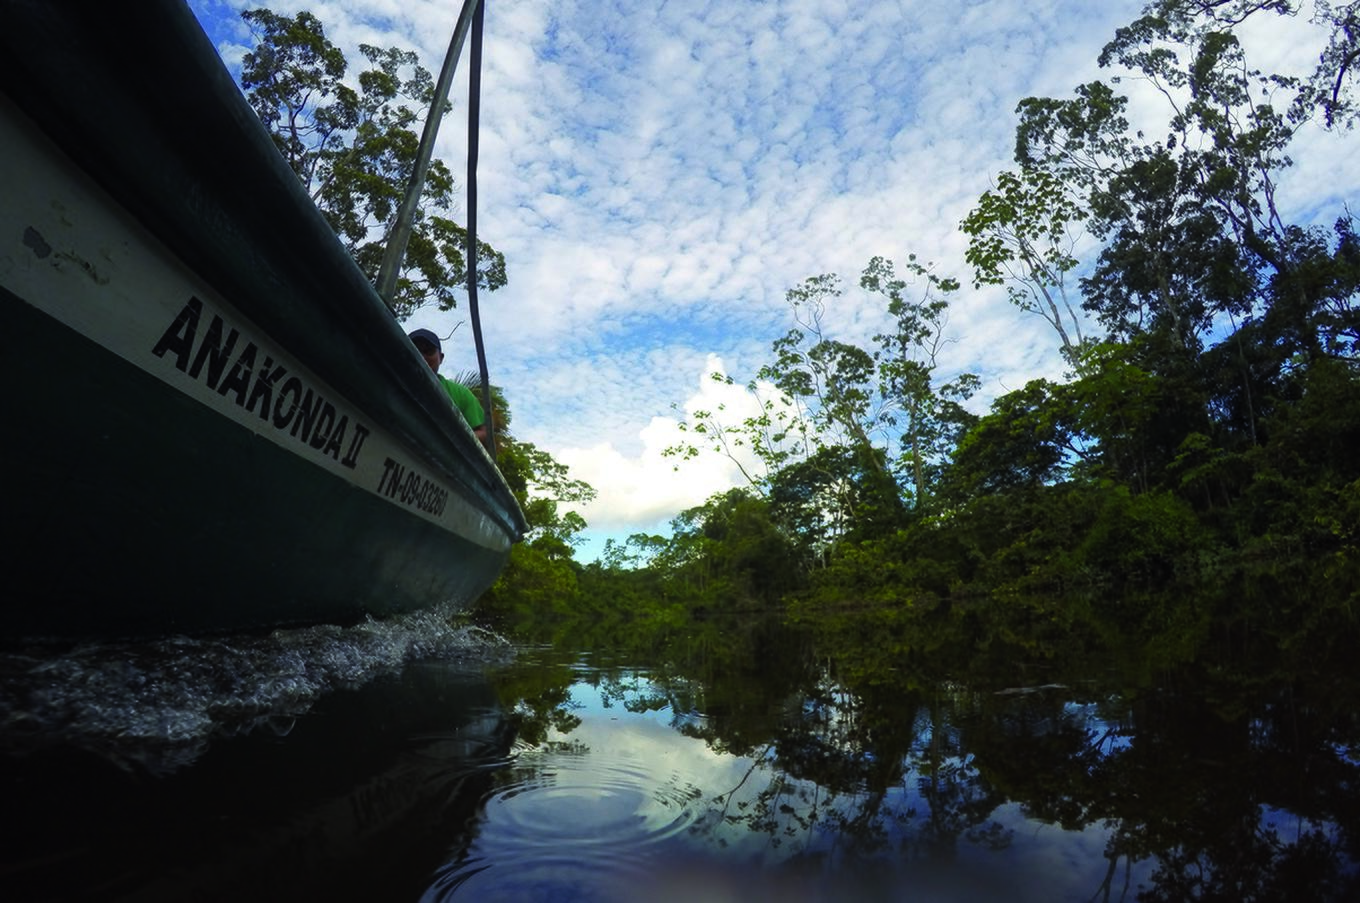 viaje lujo experiencia barco Anakonda Amazonas Ecuador